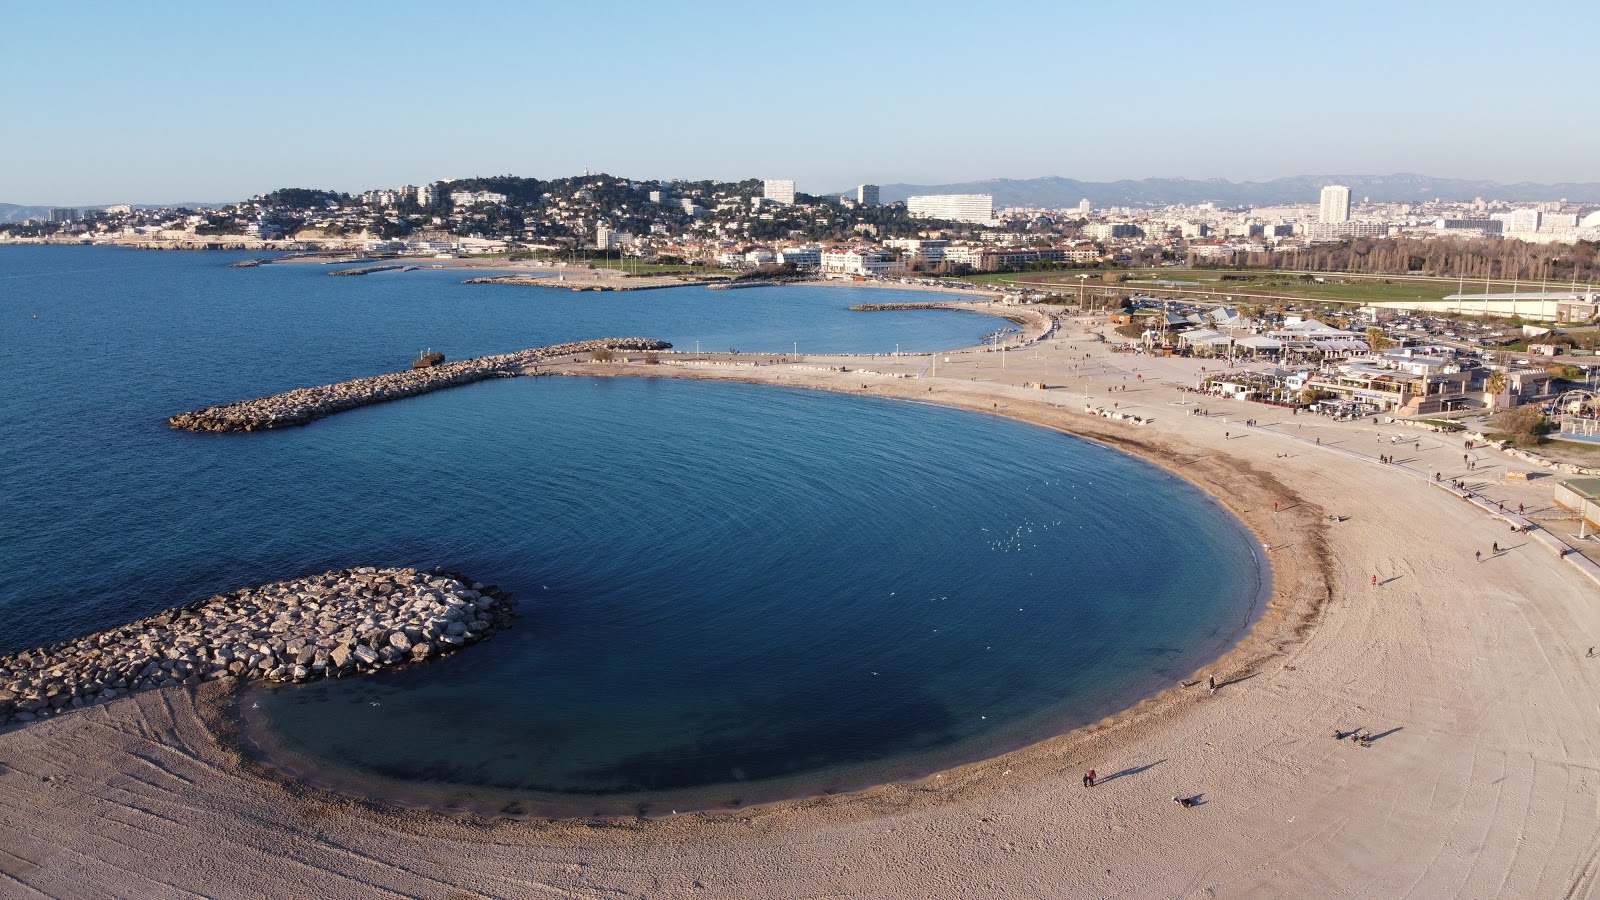 Fotografija Prado plaže z turkizna čista voda površino